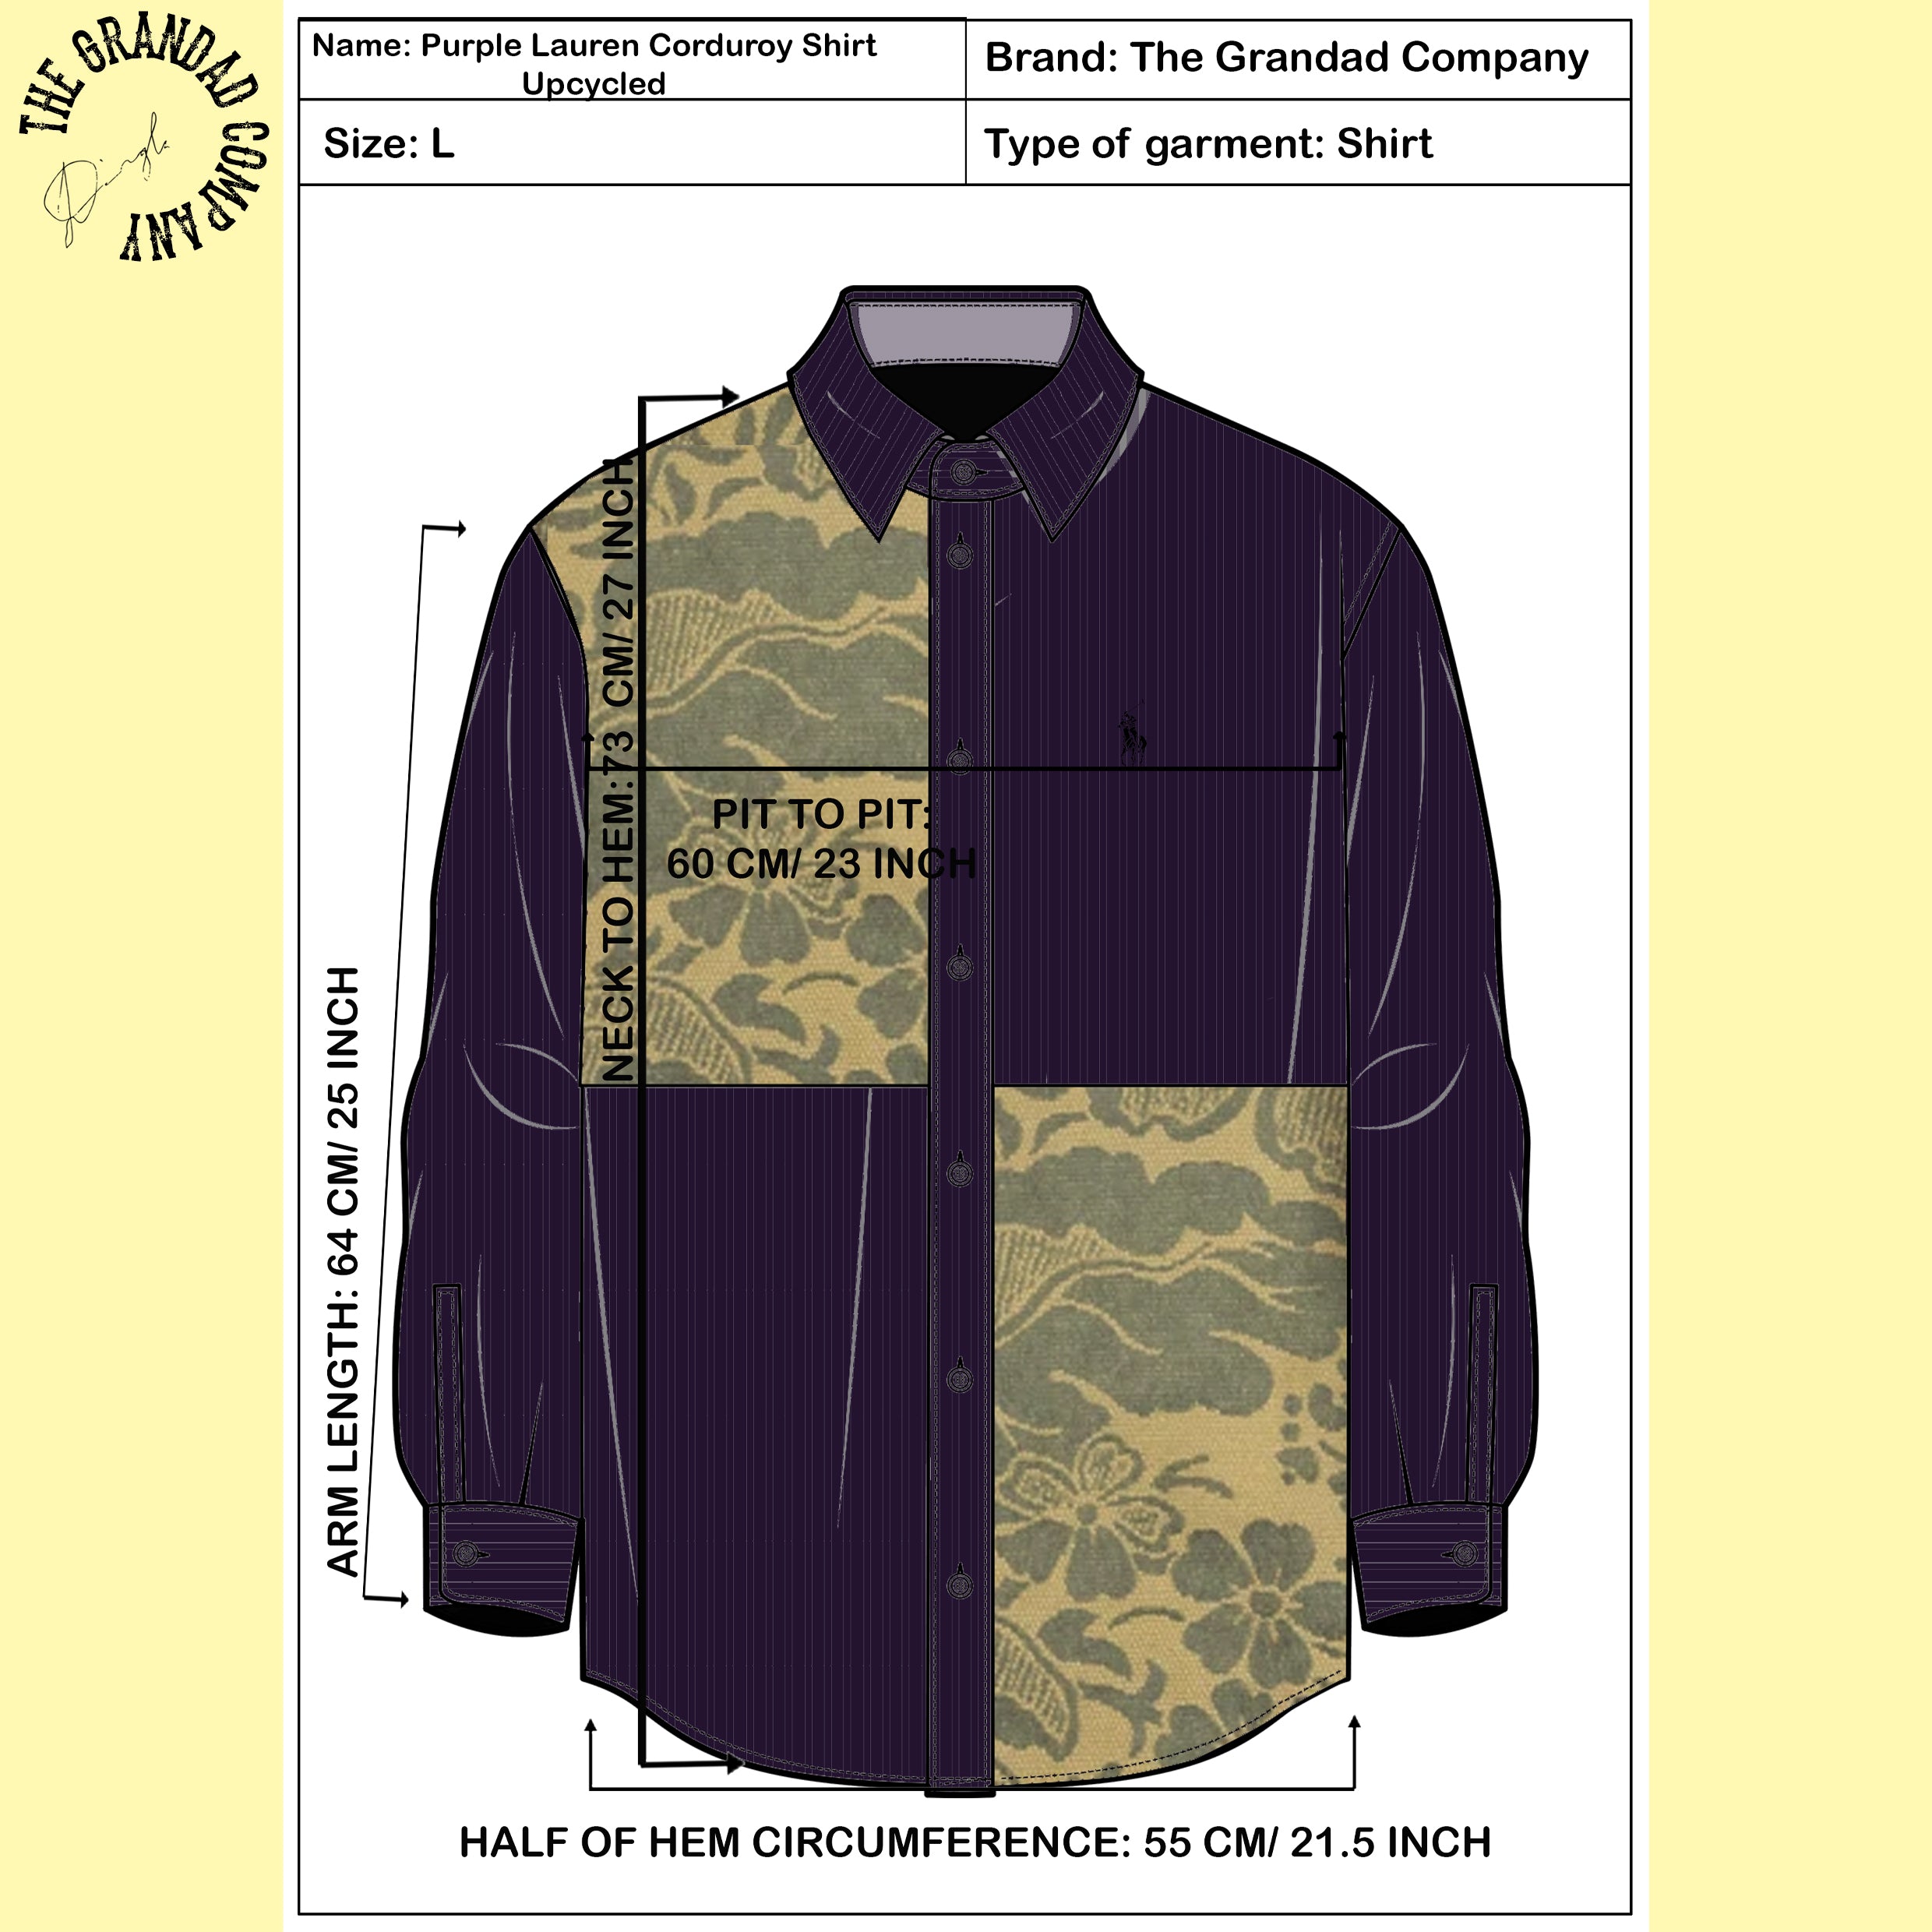 Purple Ralph Lauren Corduroy Shirt Upcycled